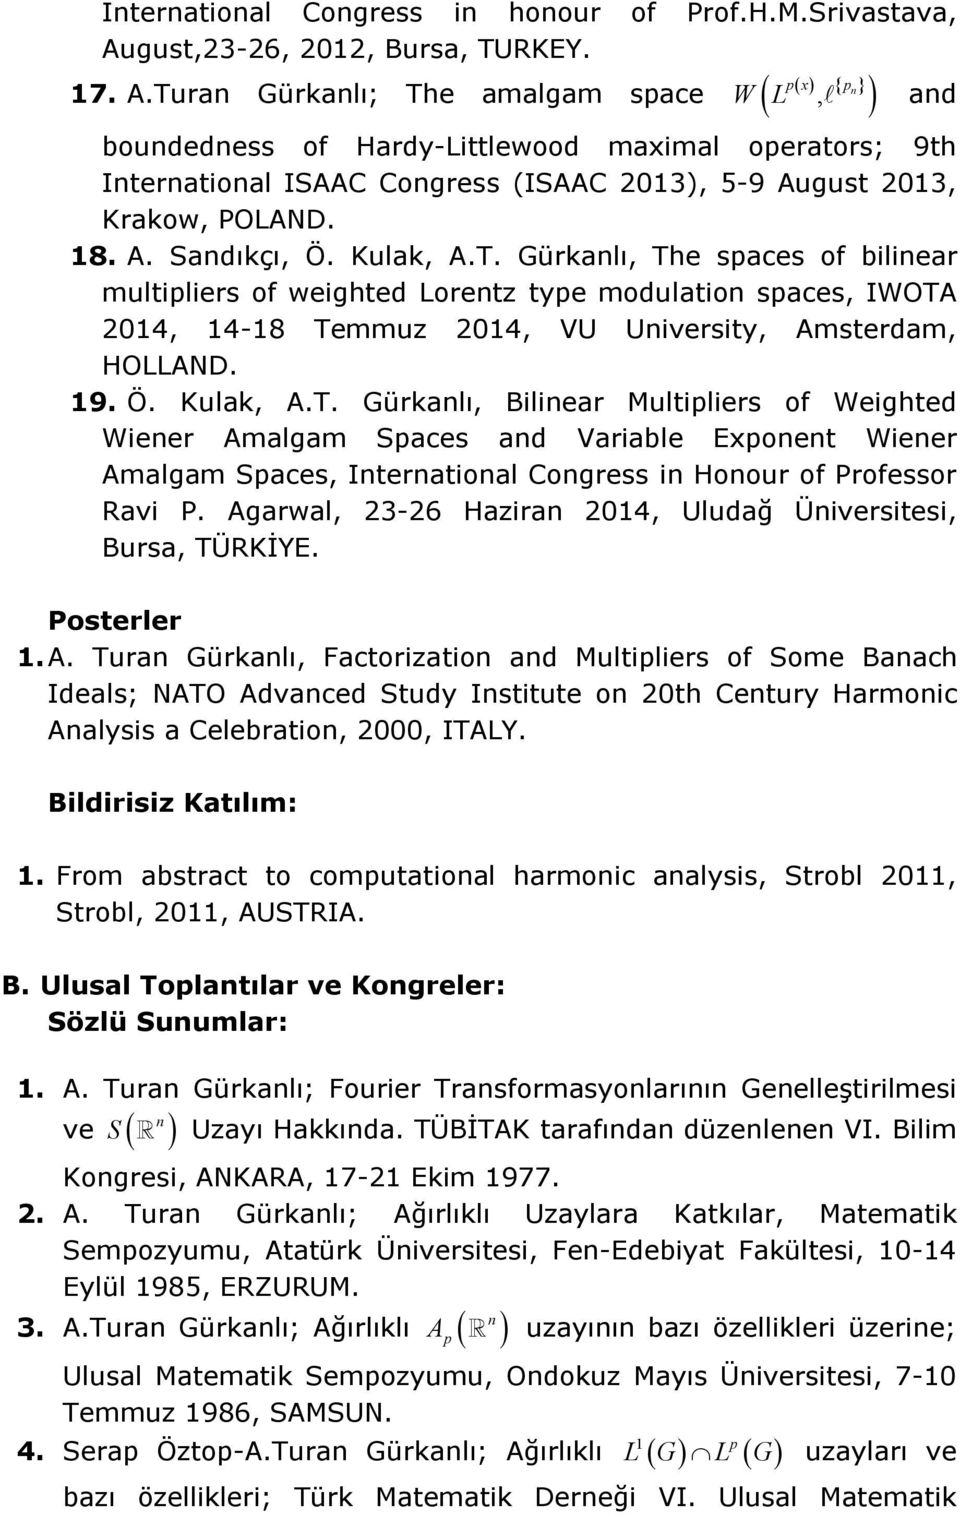 Turan Gürkanlı; The amalgam space p p x n W L, an bouneness of Hary-Littleoo maximal operators; 9th International ISAAC Congress (ISAAC 2013), 5-9 August 2013, Krako, POLAND. 18. A. Sanıkçı, Ö.